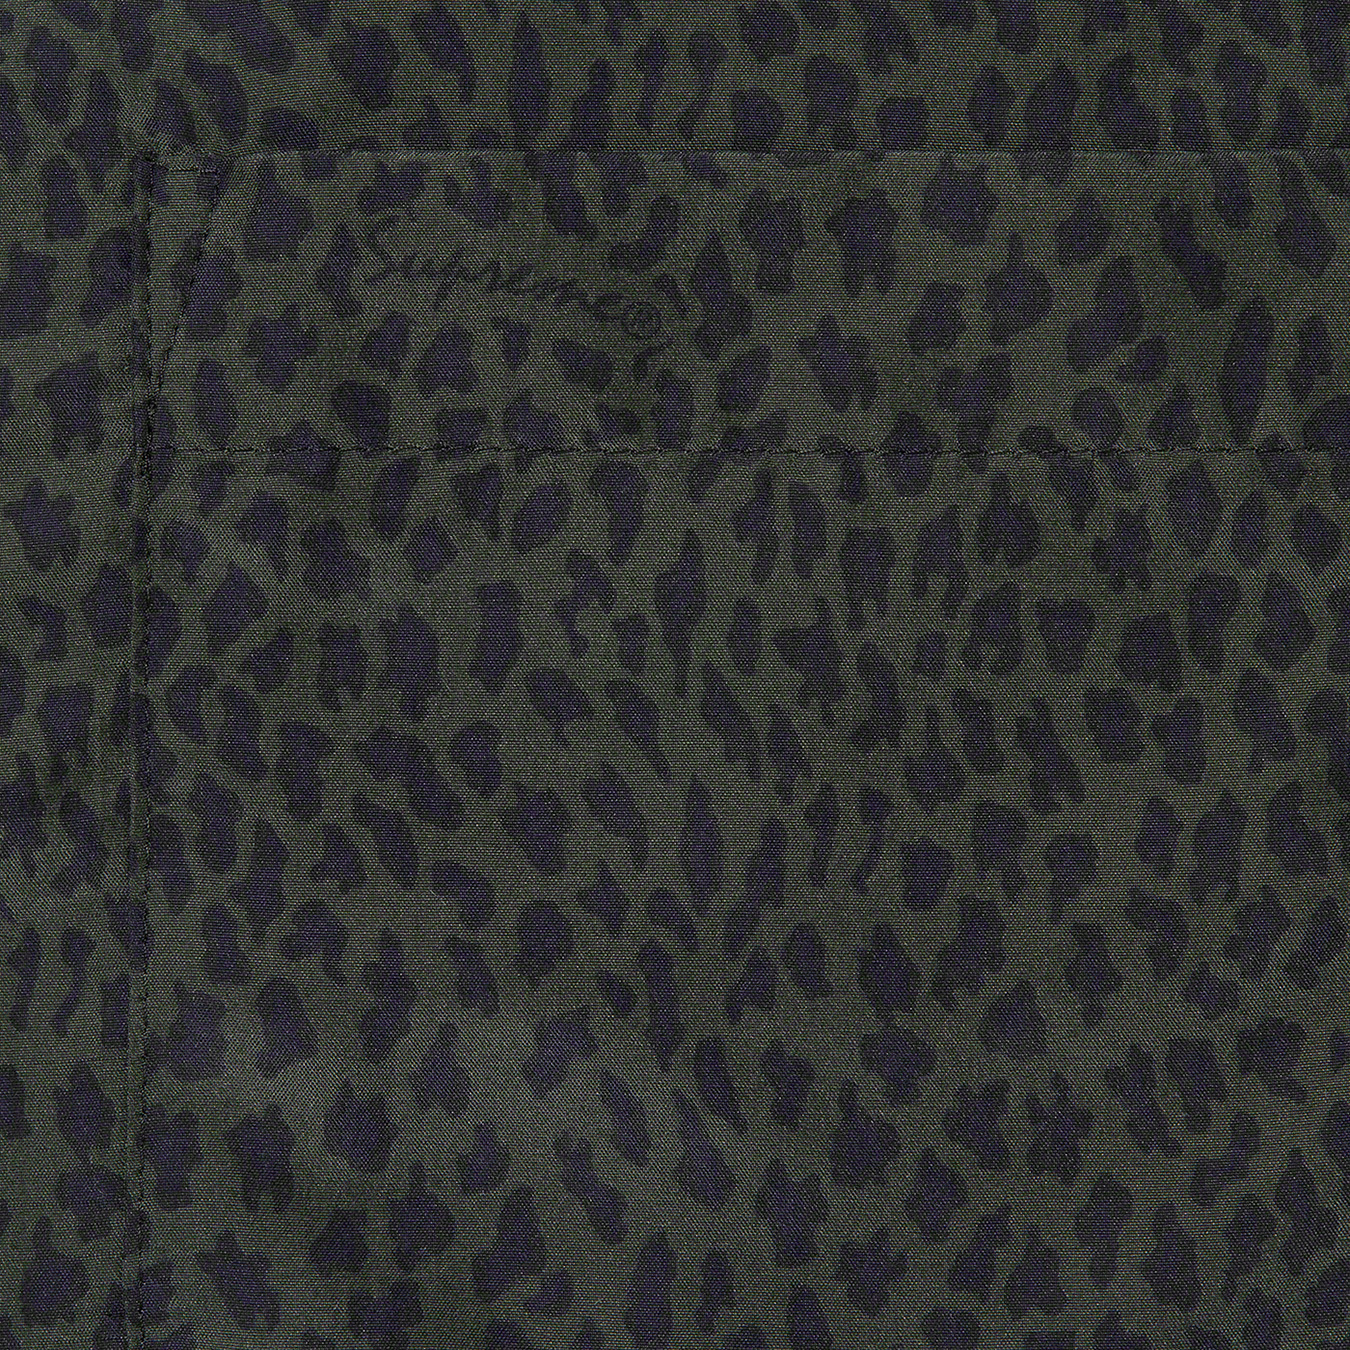 Supreme Leopard Silk S/S Shirt